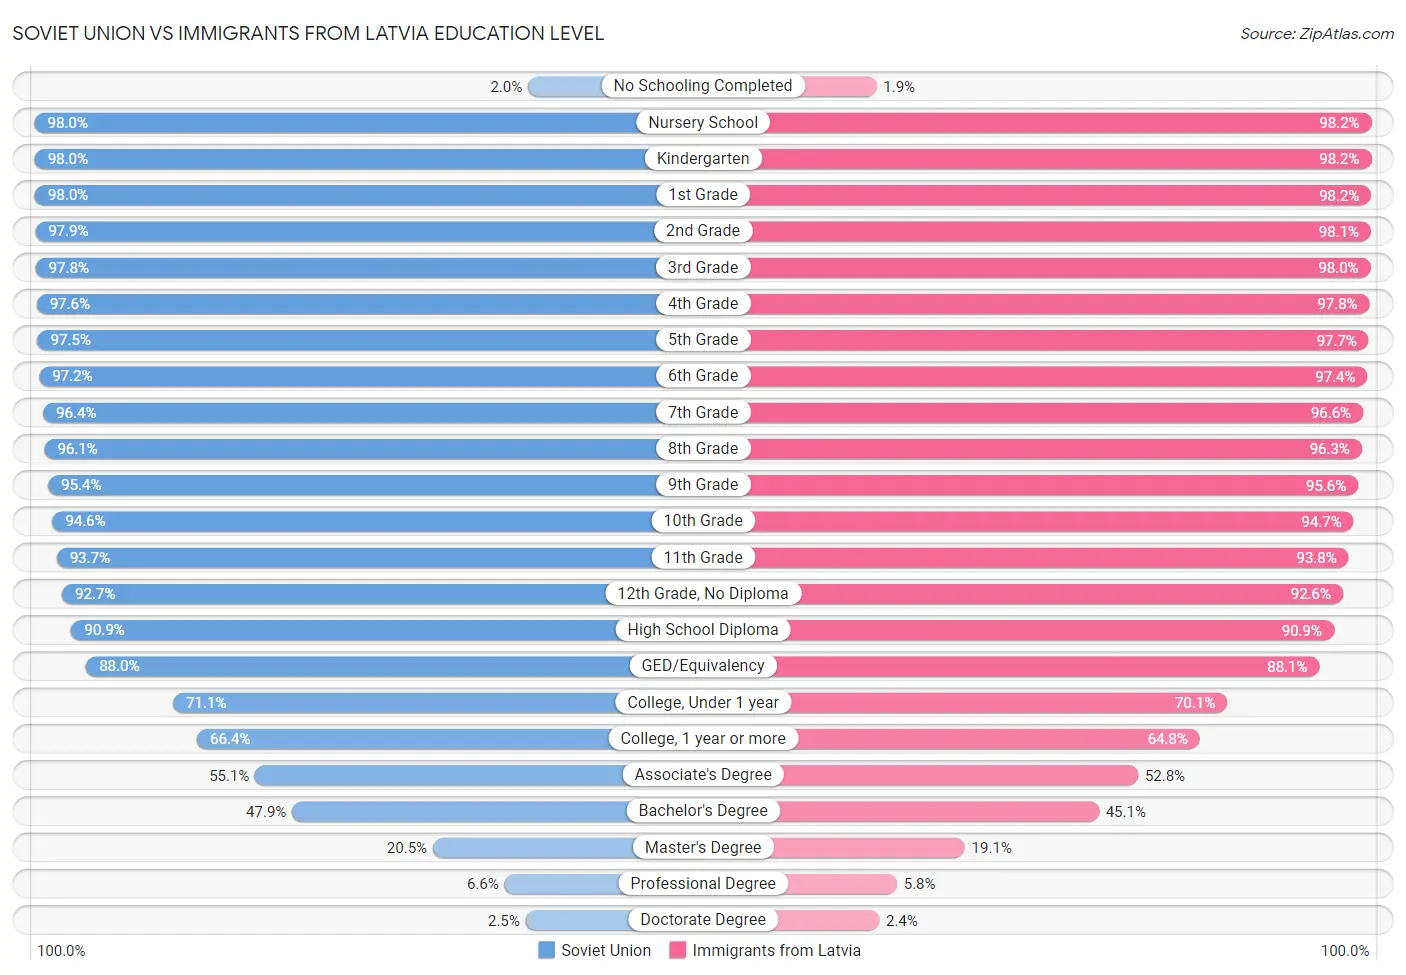 Soviet Union vs Immigrants from Latvia Education Level